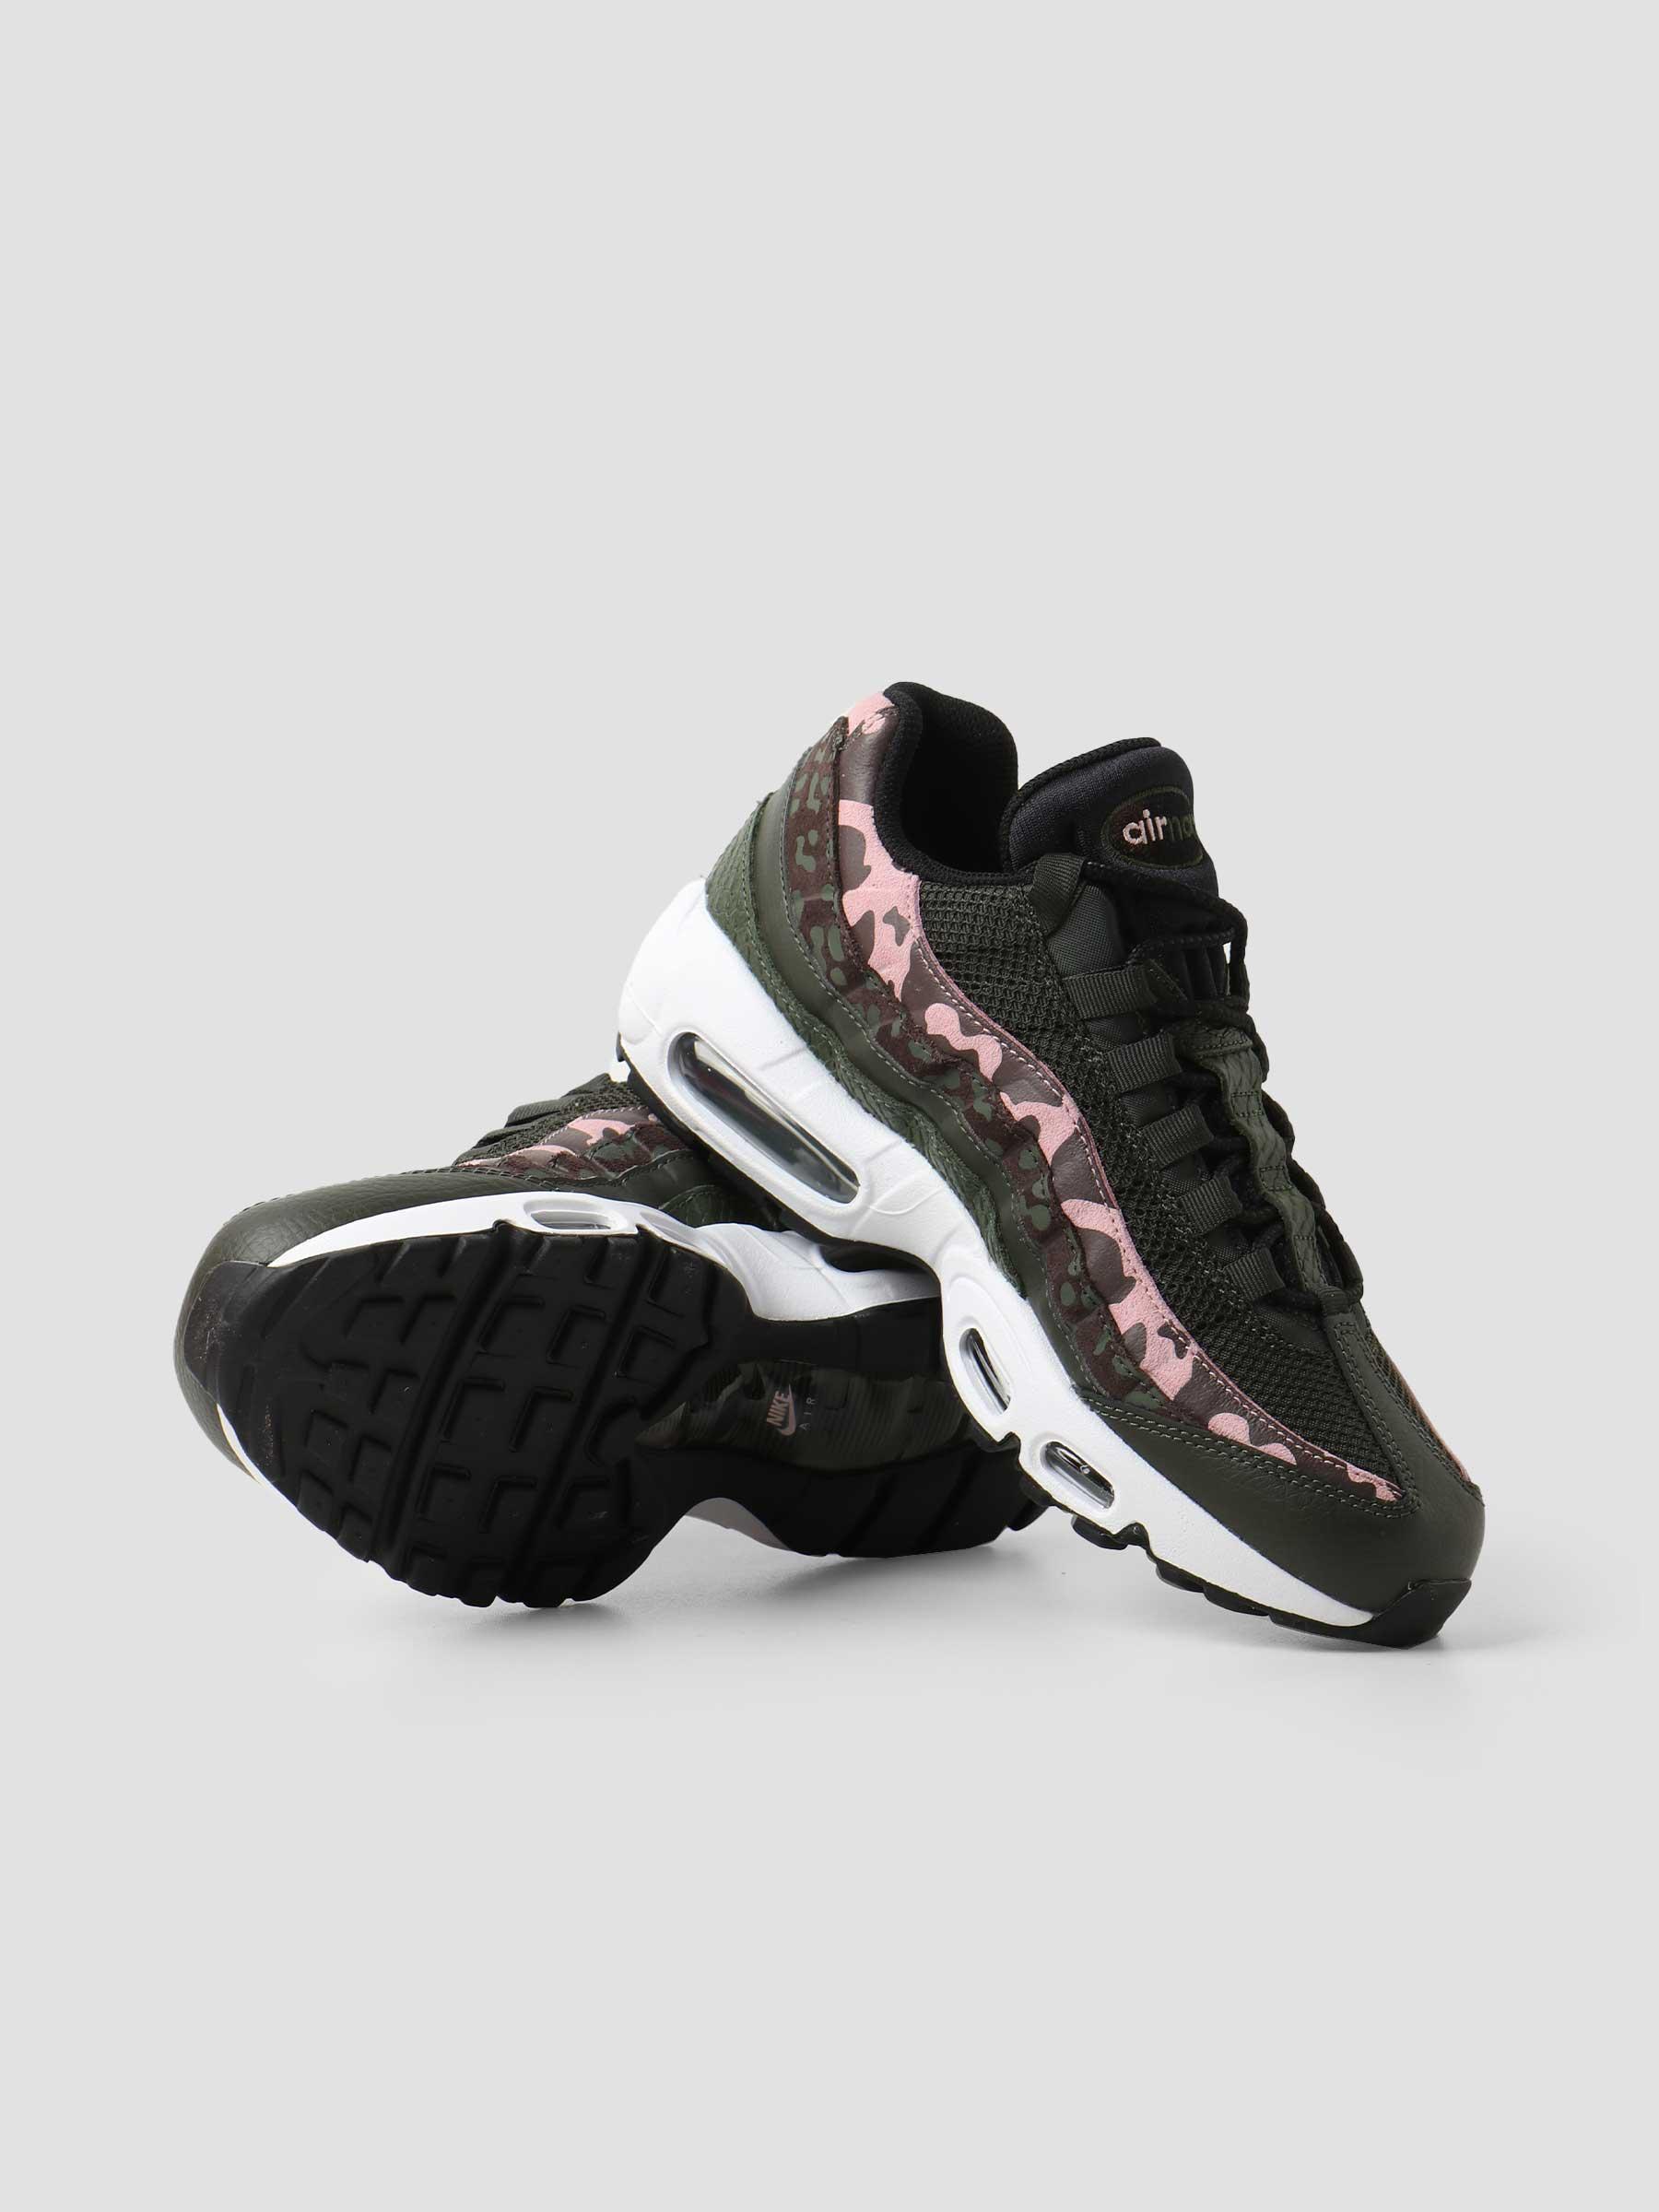 Wmns Nike Air Max 95 Brown Basalt Black Sequoia Pink Glaze DN5462-200